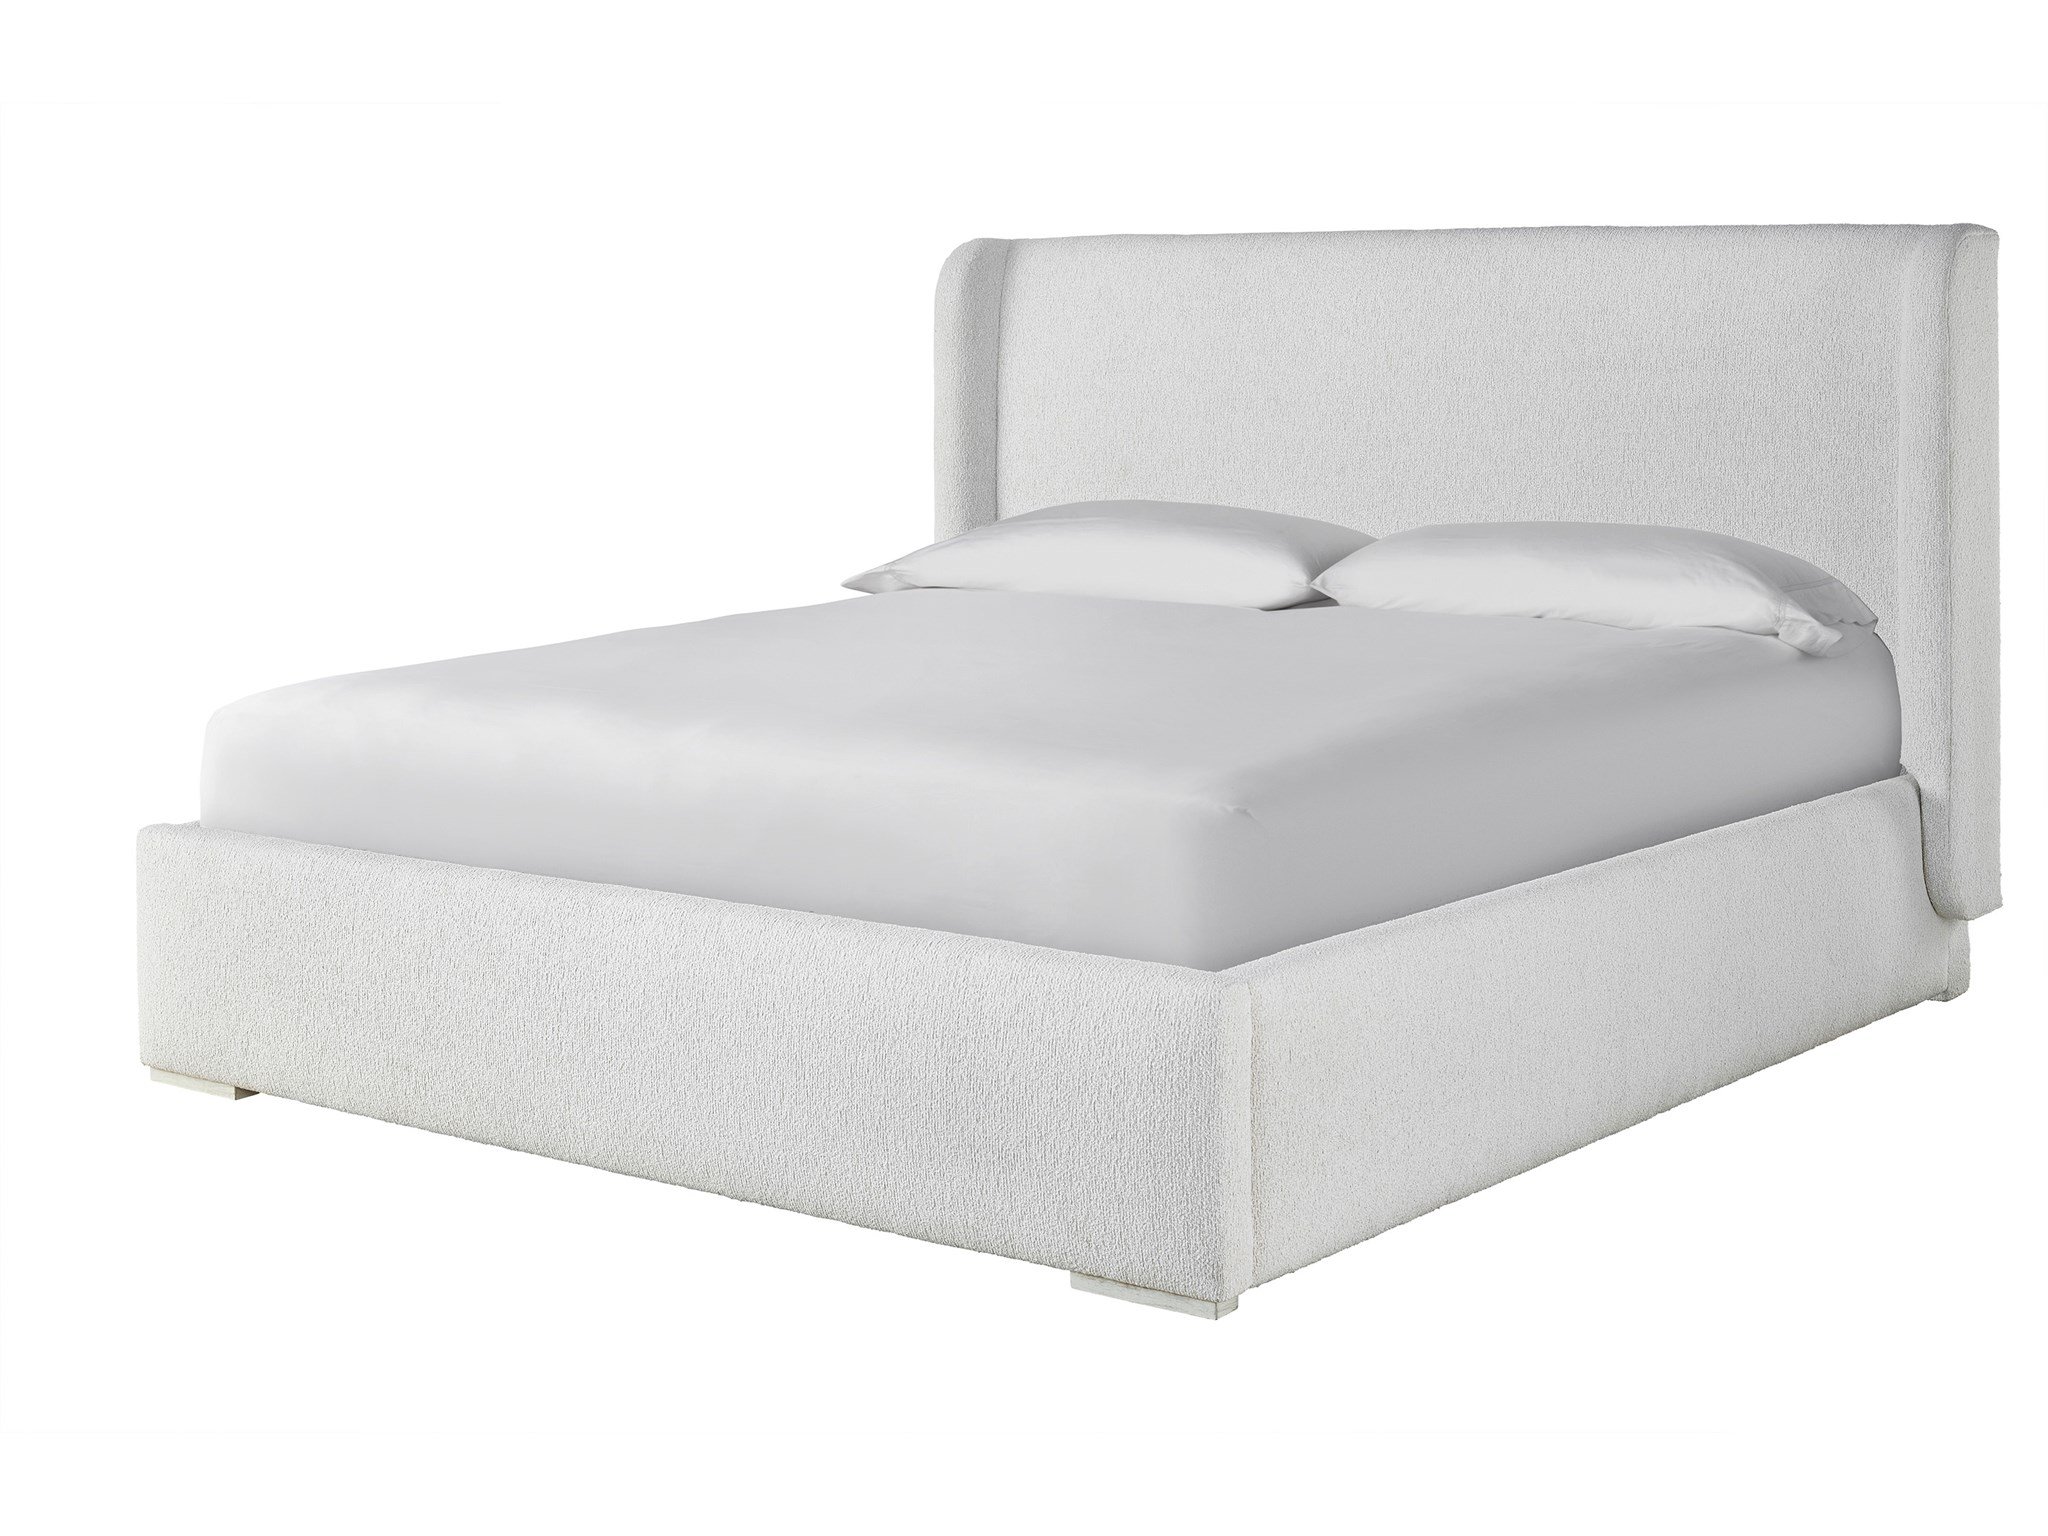 Restore Upholstered Bed King